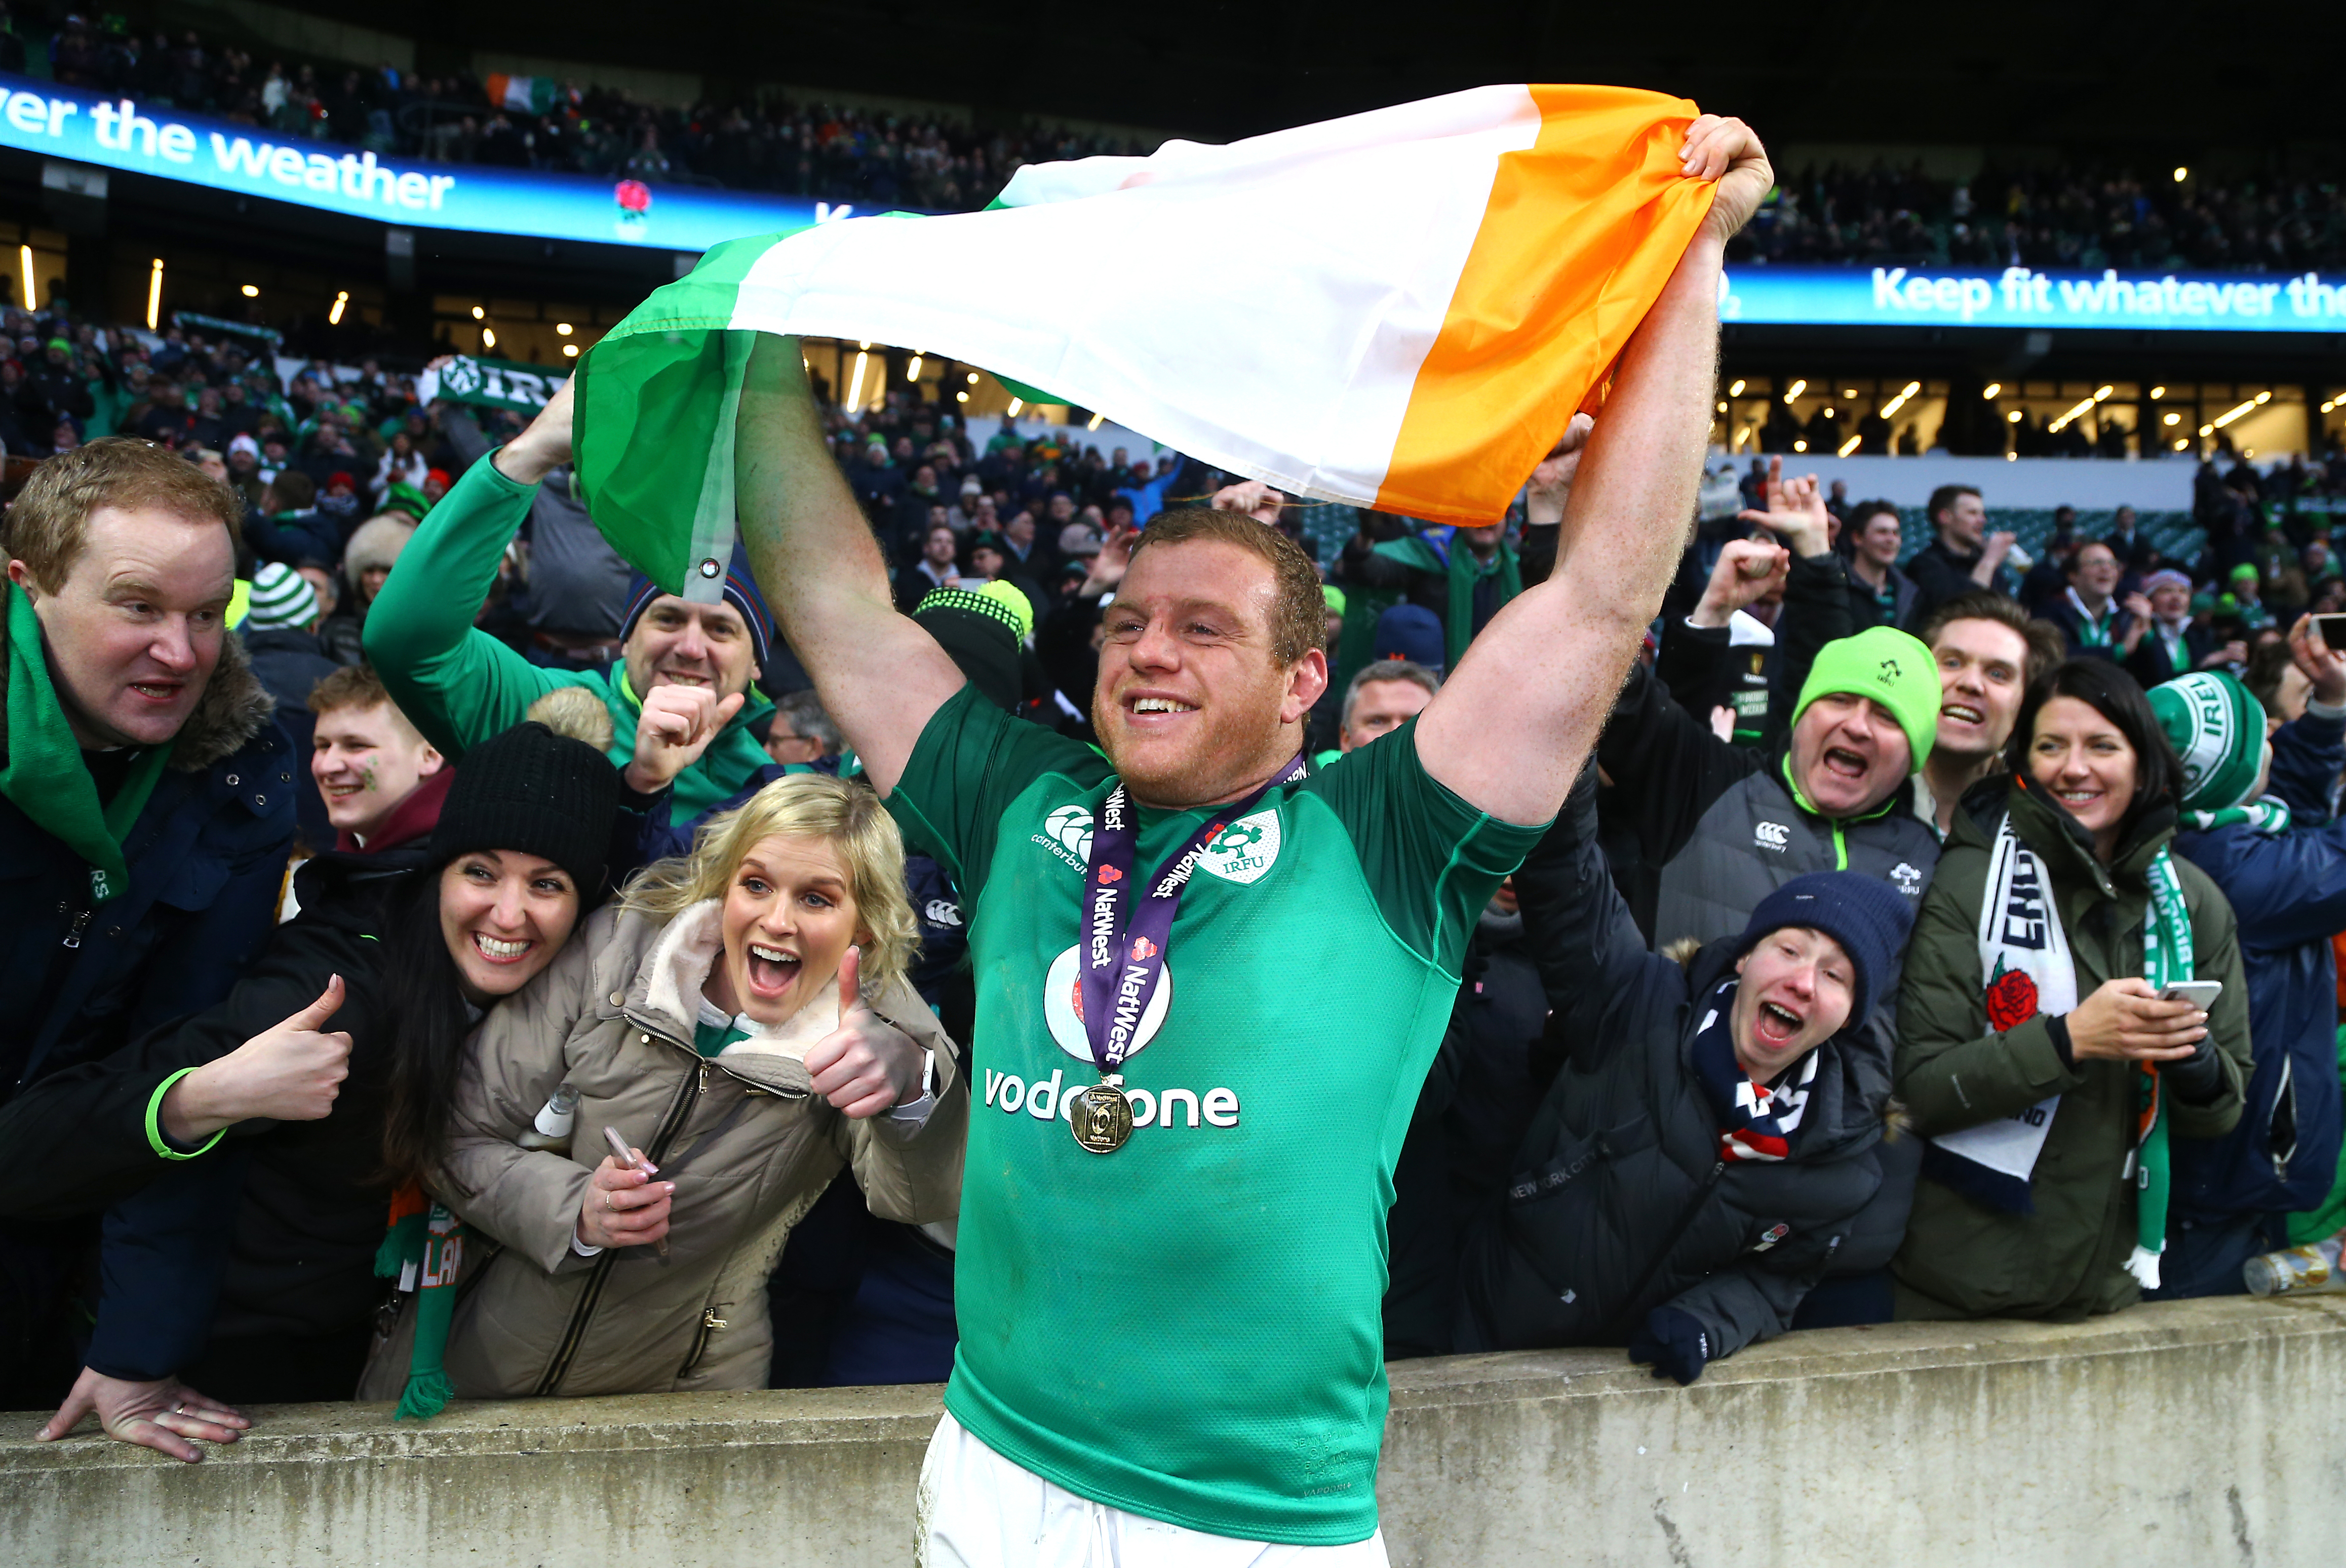 Ireland's Sean Cronin celebrates winning the grand slam during the NatWest 6 Nations match at Twickenham Stadium, London